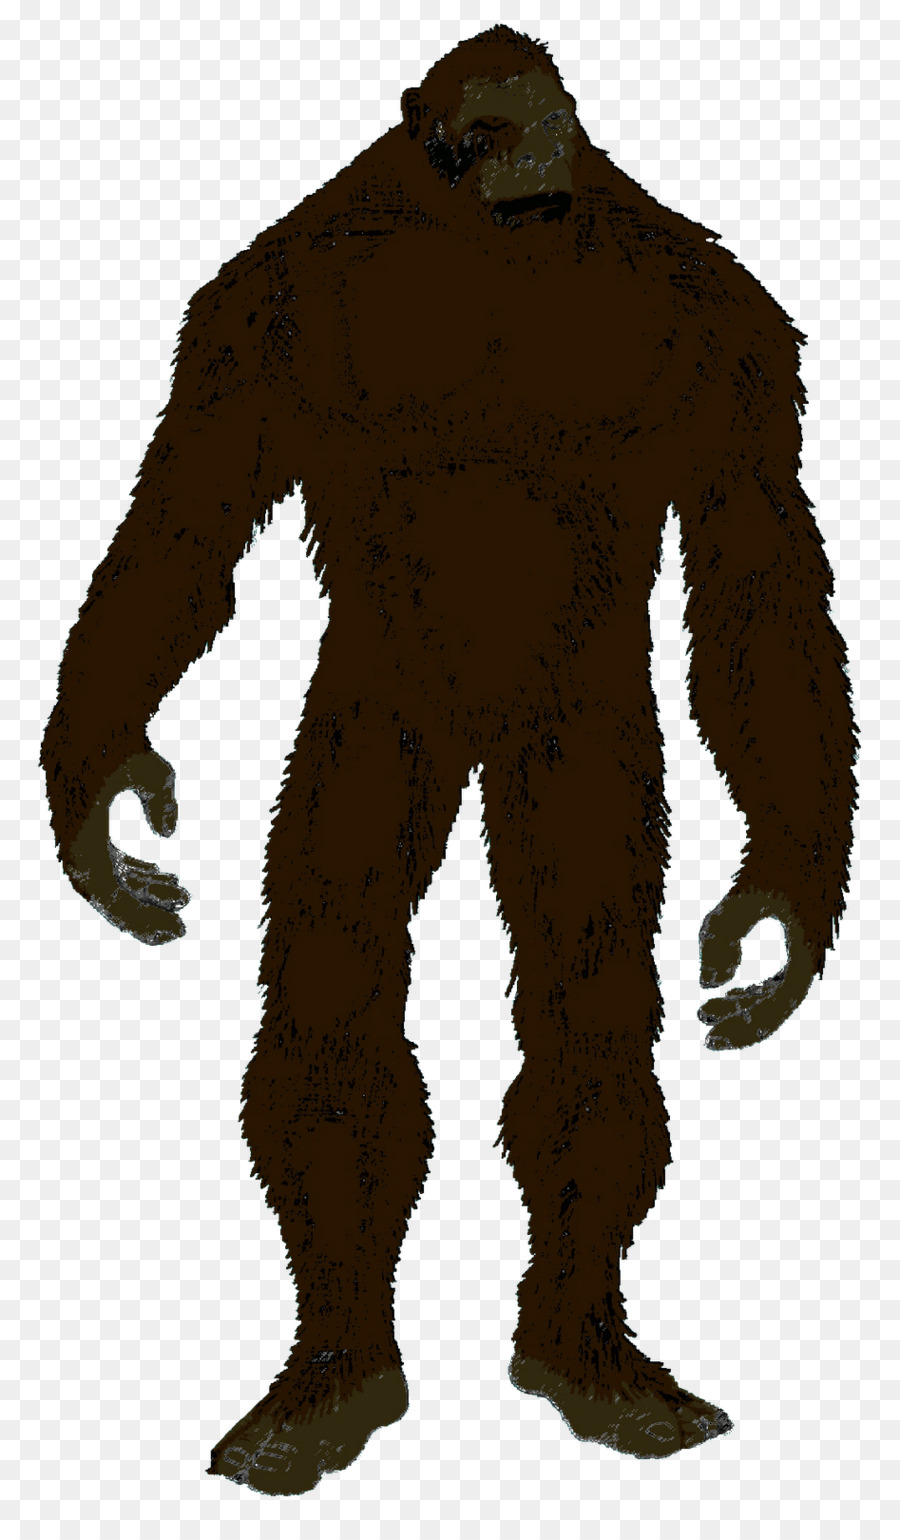 Bigfoot Silhouette Yeti Clip art - Sights png download - 947*1600 - Free Transparent Bigfoot png Download.